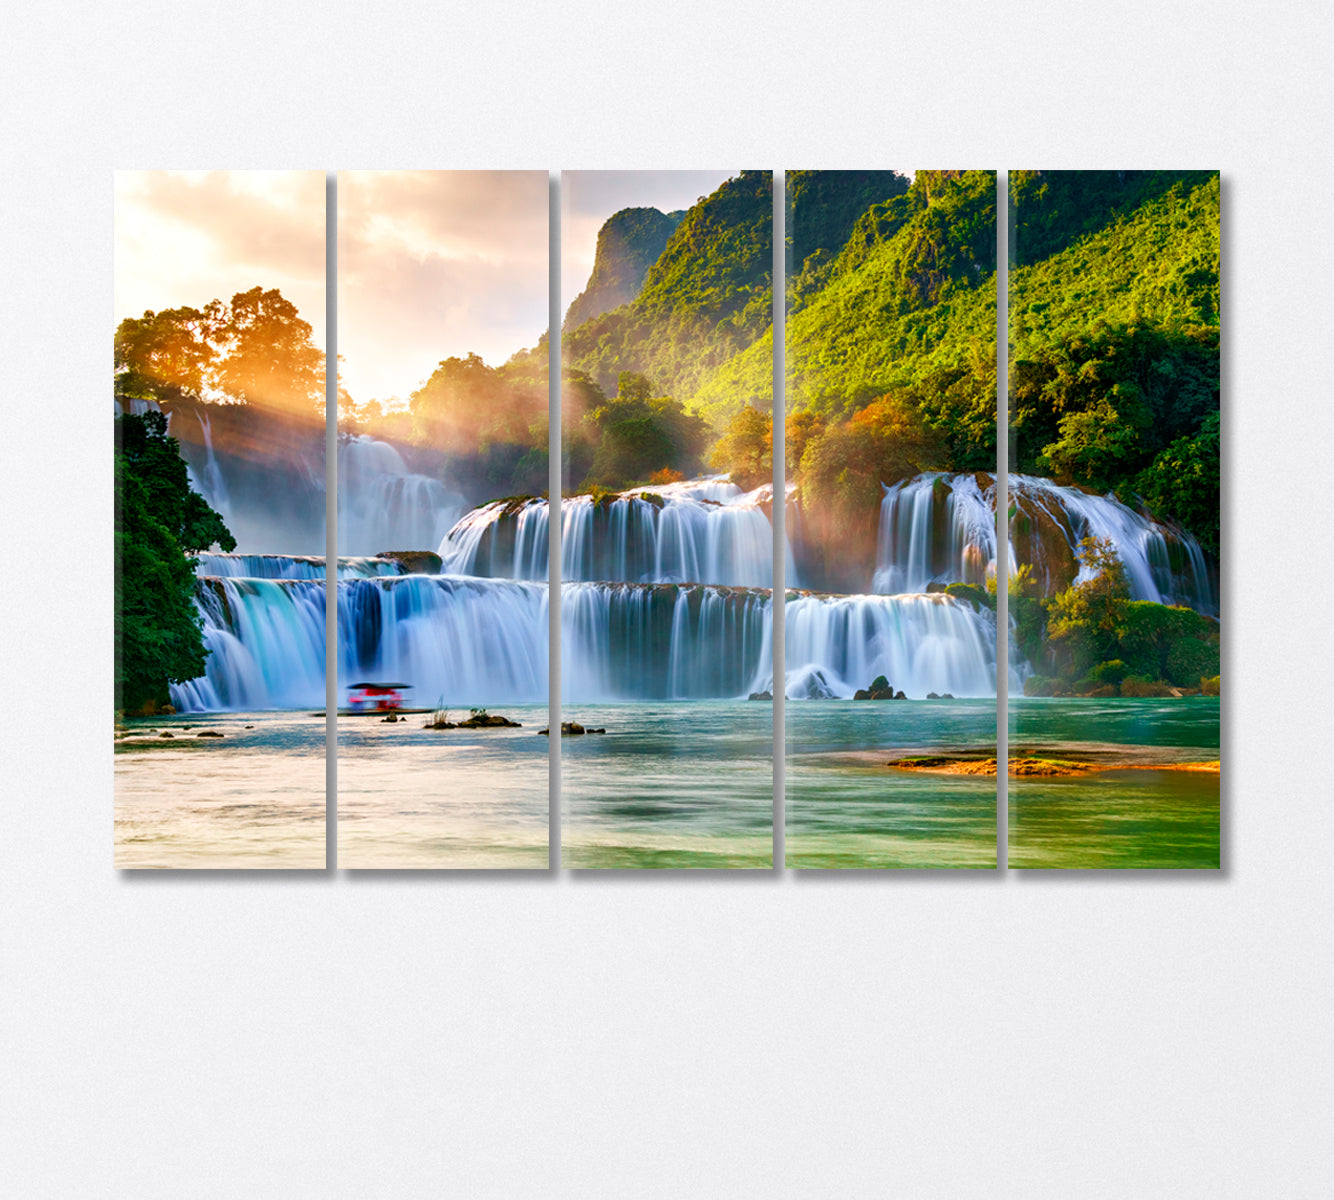 Ban Gioc Water Falls Vietnam Canvas Print-Canvas Print-CetArt-5 Panels-36x24 inches-CetArt